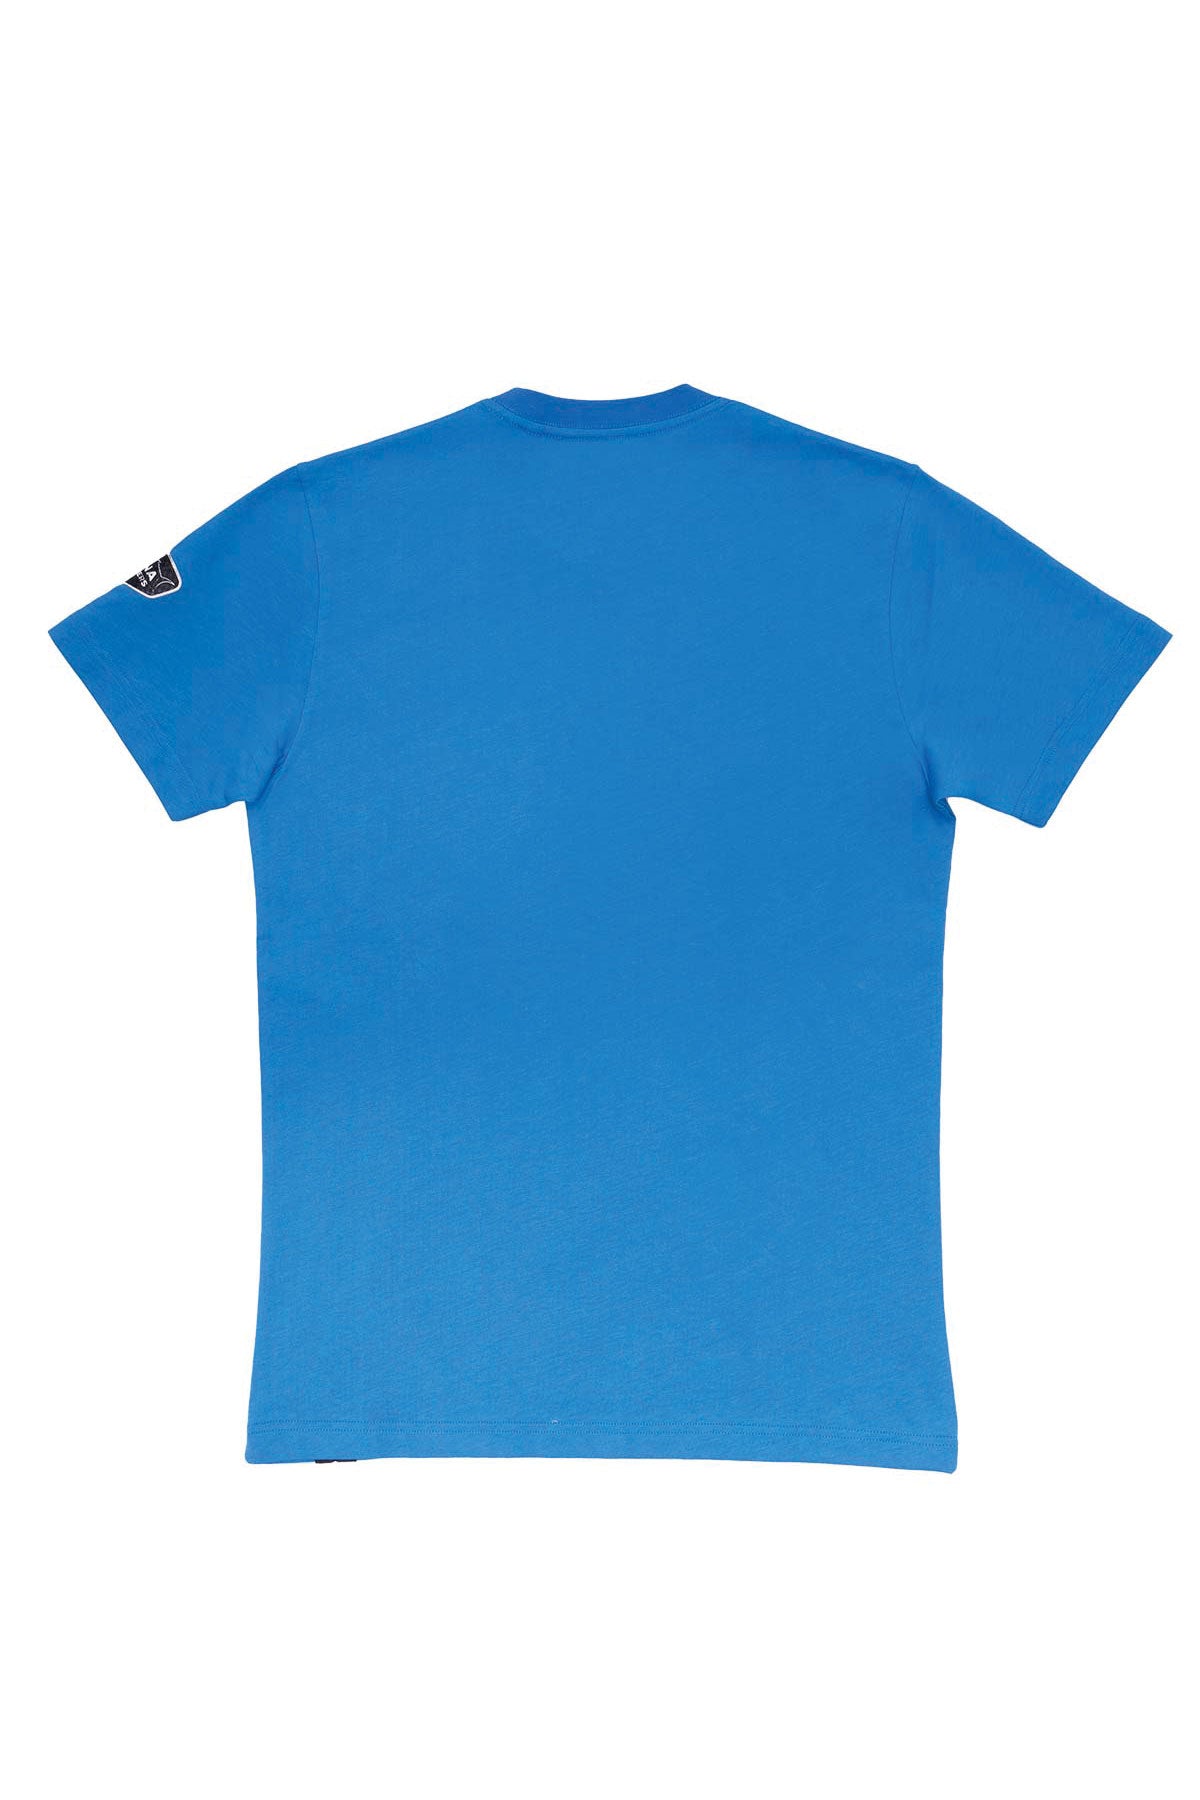 BFT  Basic Short Sleeve Crew Neck T-Shirt - Blue - Stafu Pro Series